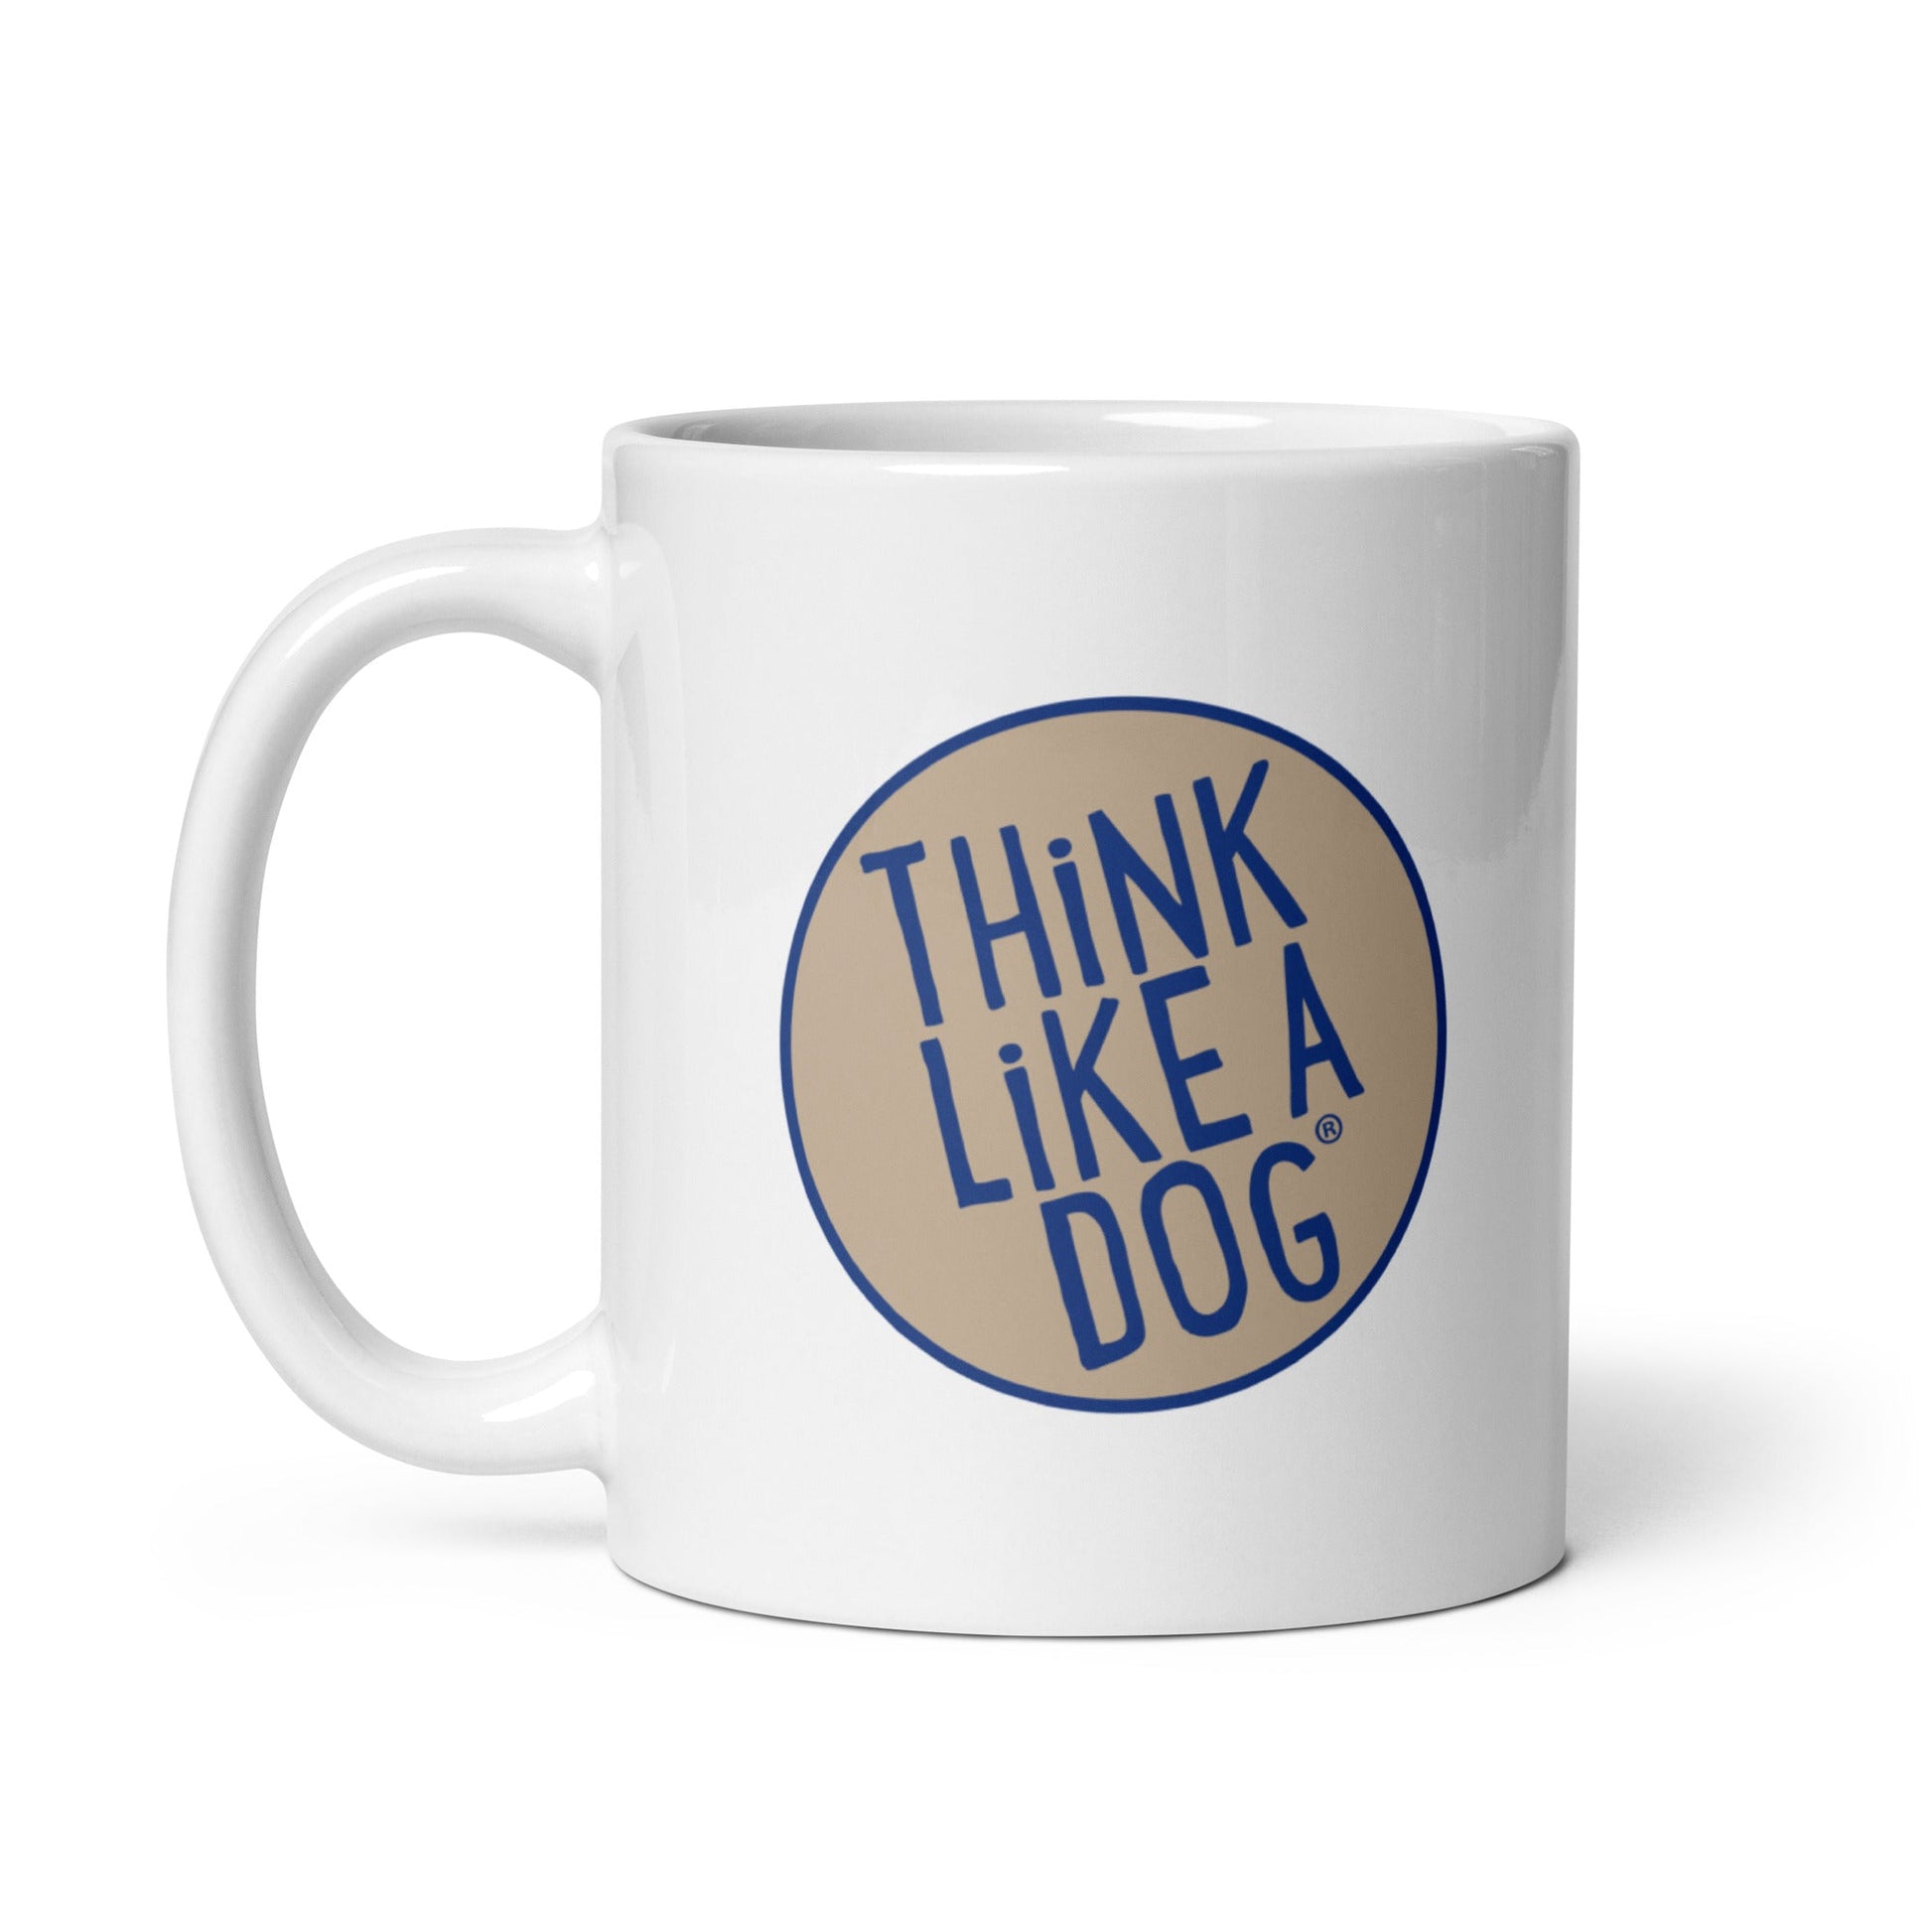 THiNK LiKE A DOG® Blue & Tan Colorway Logo on White Glossy Mug for dog lovers.